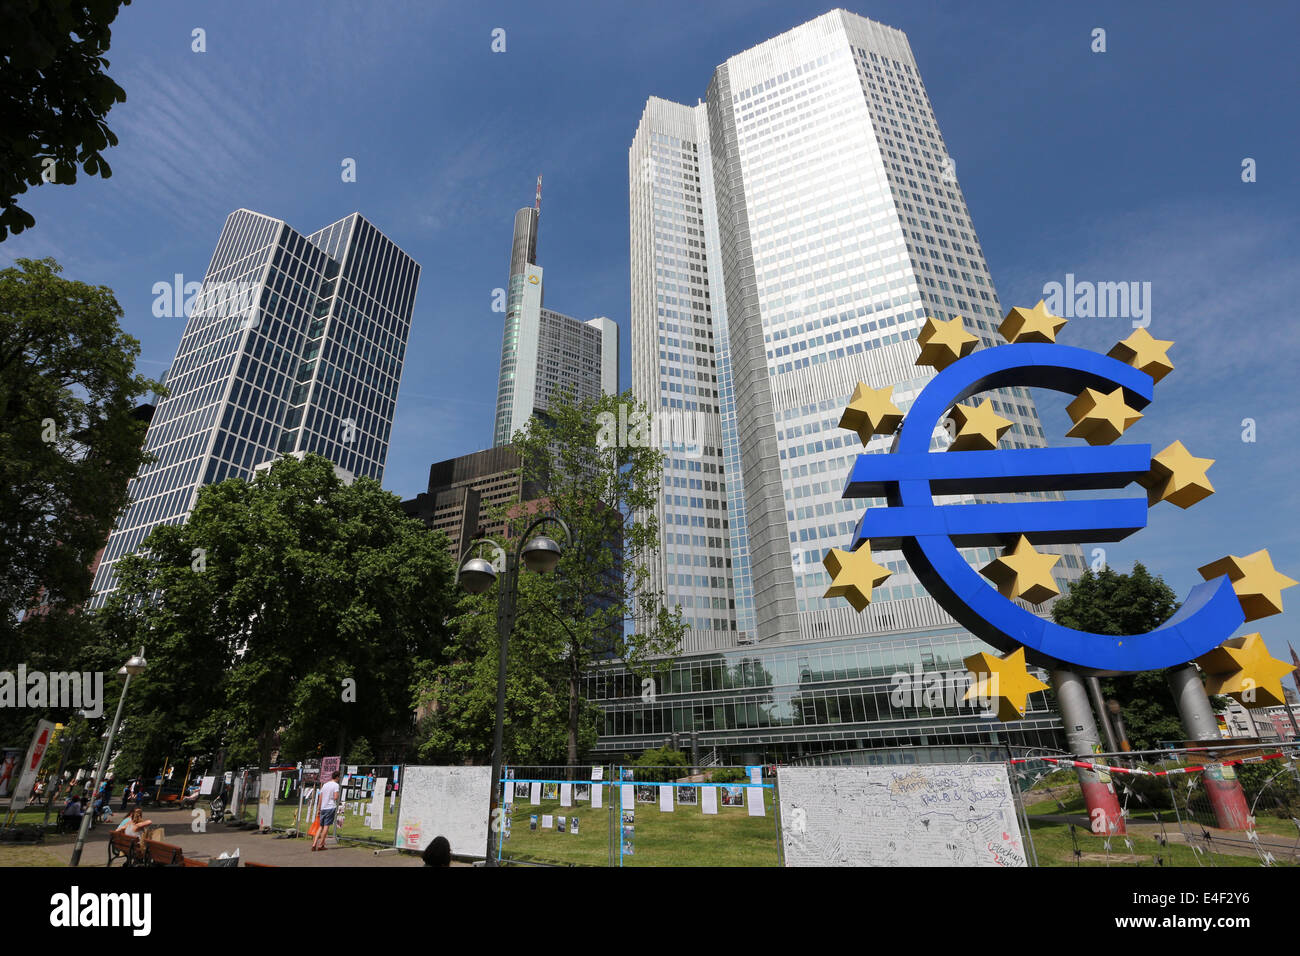 Eurotower - ECB European Central bank - Euro symbol - Frankfurt am Main - Hessen - Germany Stock Photo